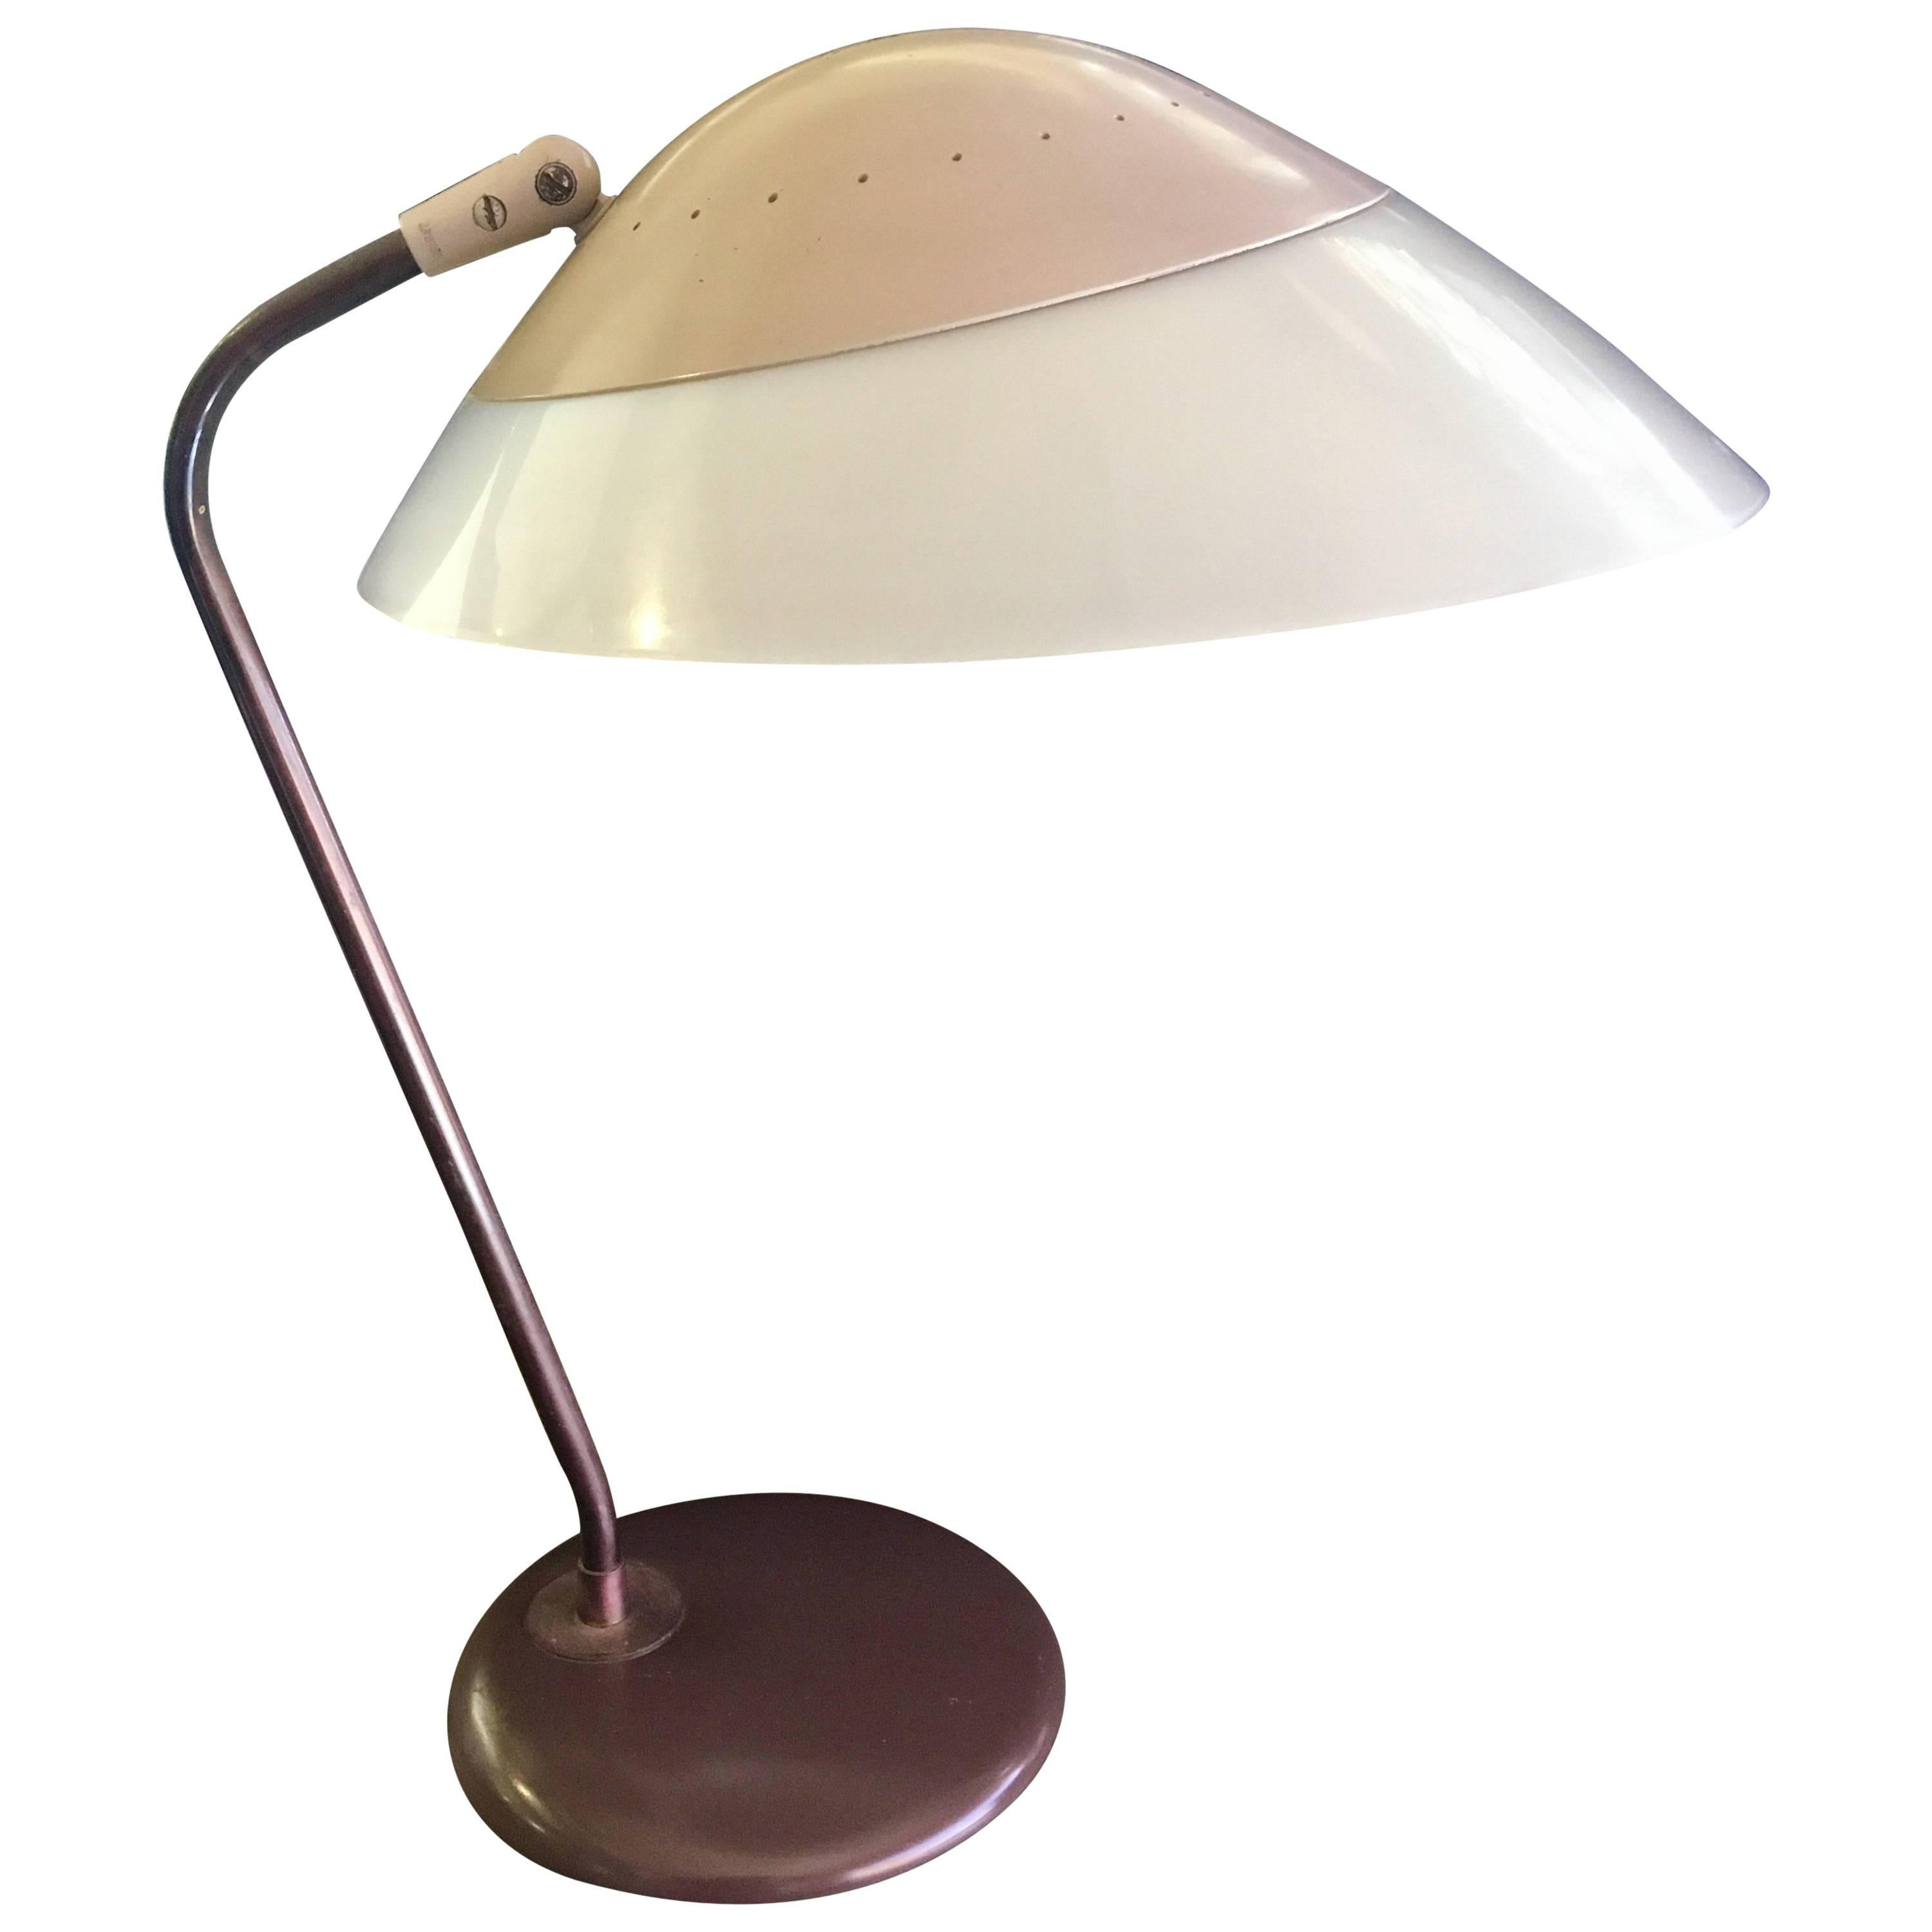 American Mid-Century Desk Lamp Designed by Gerald Thurston for Lightolier